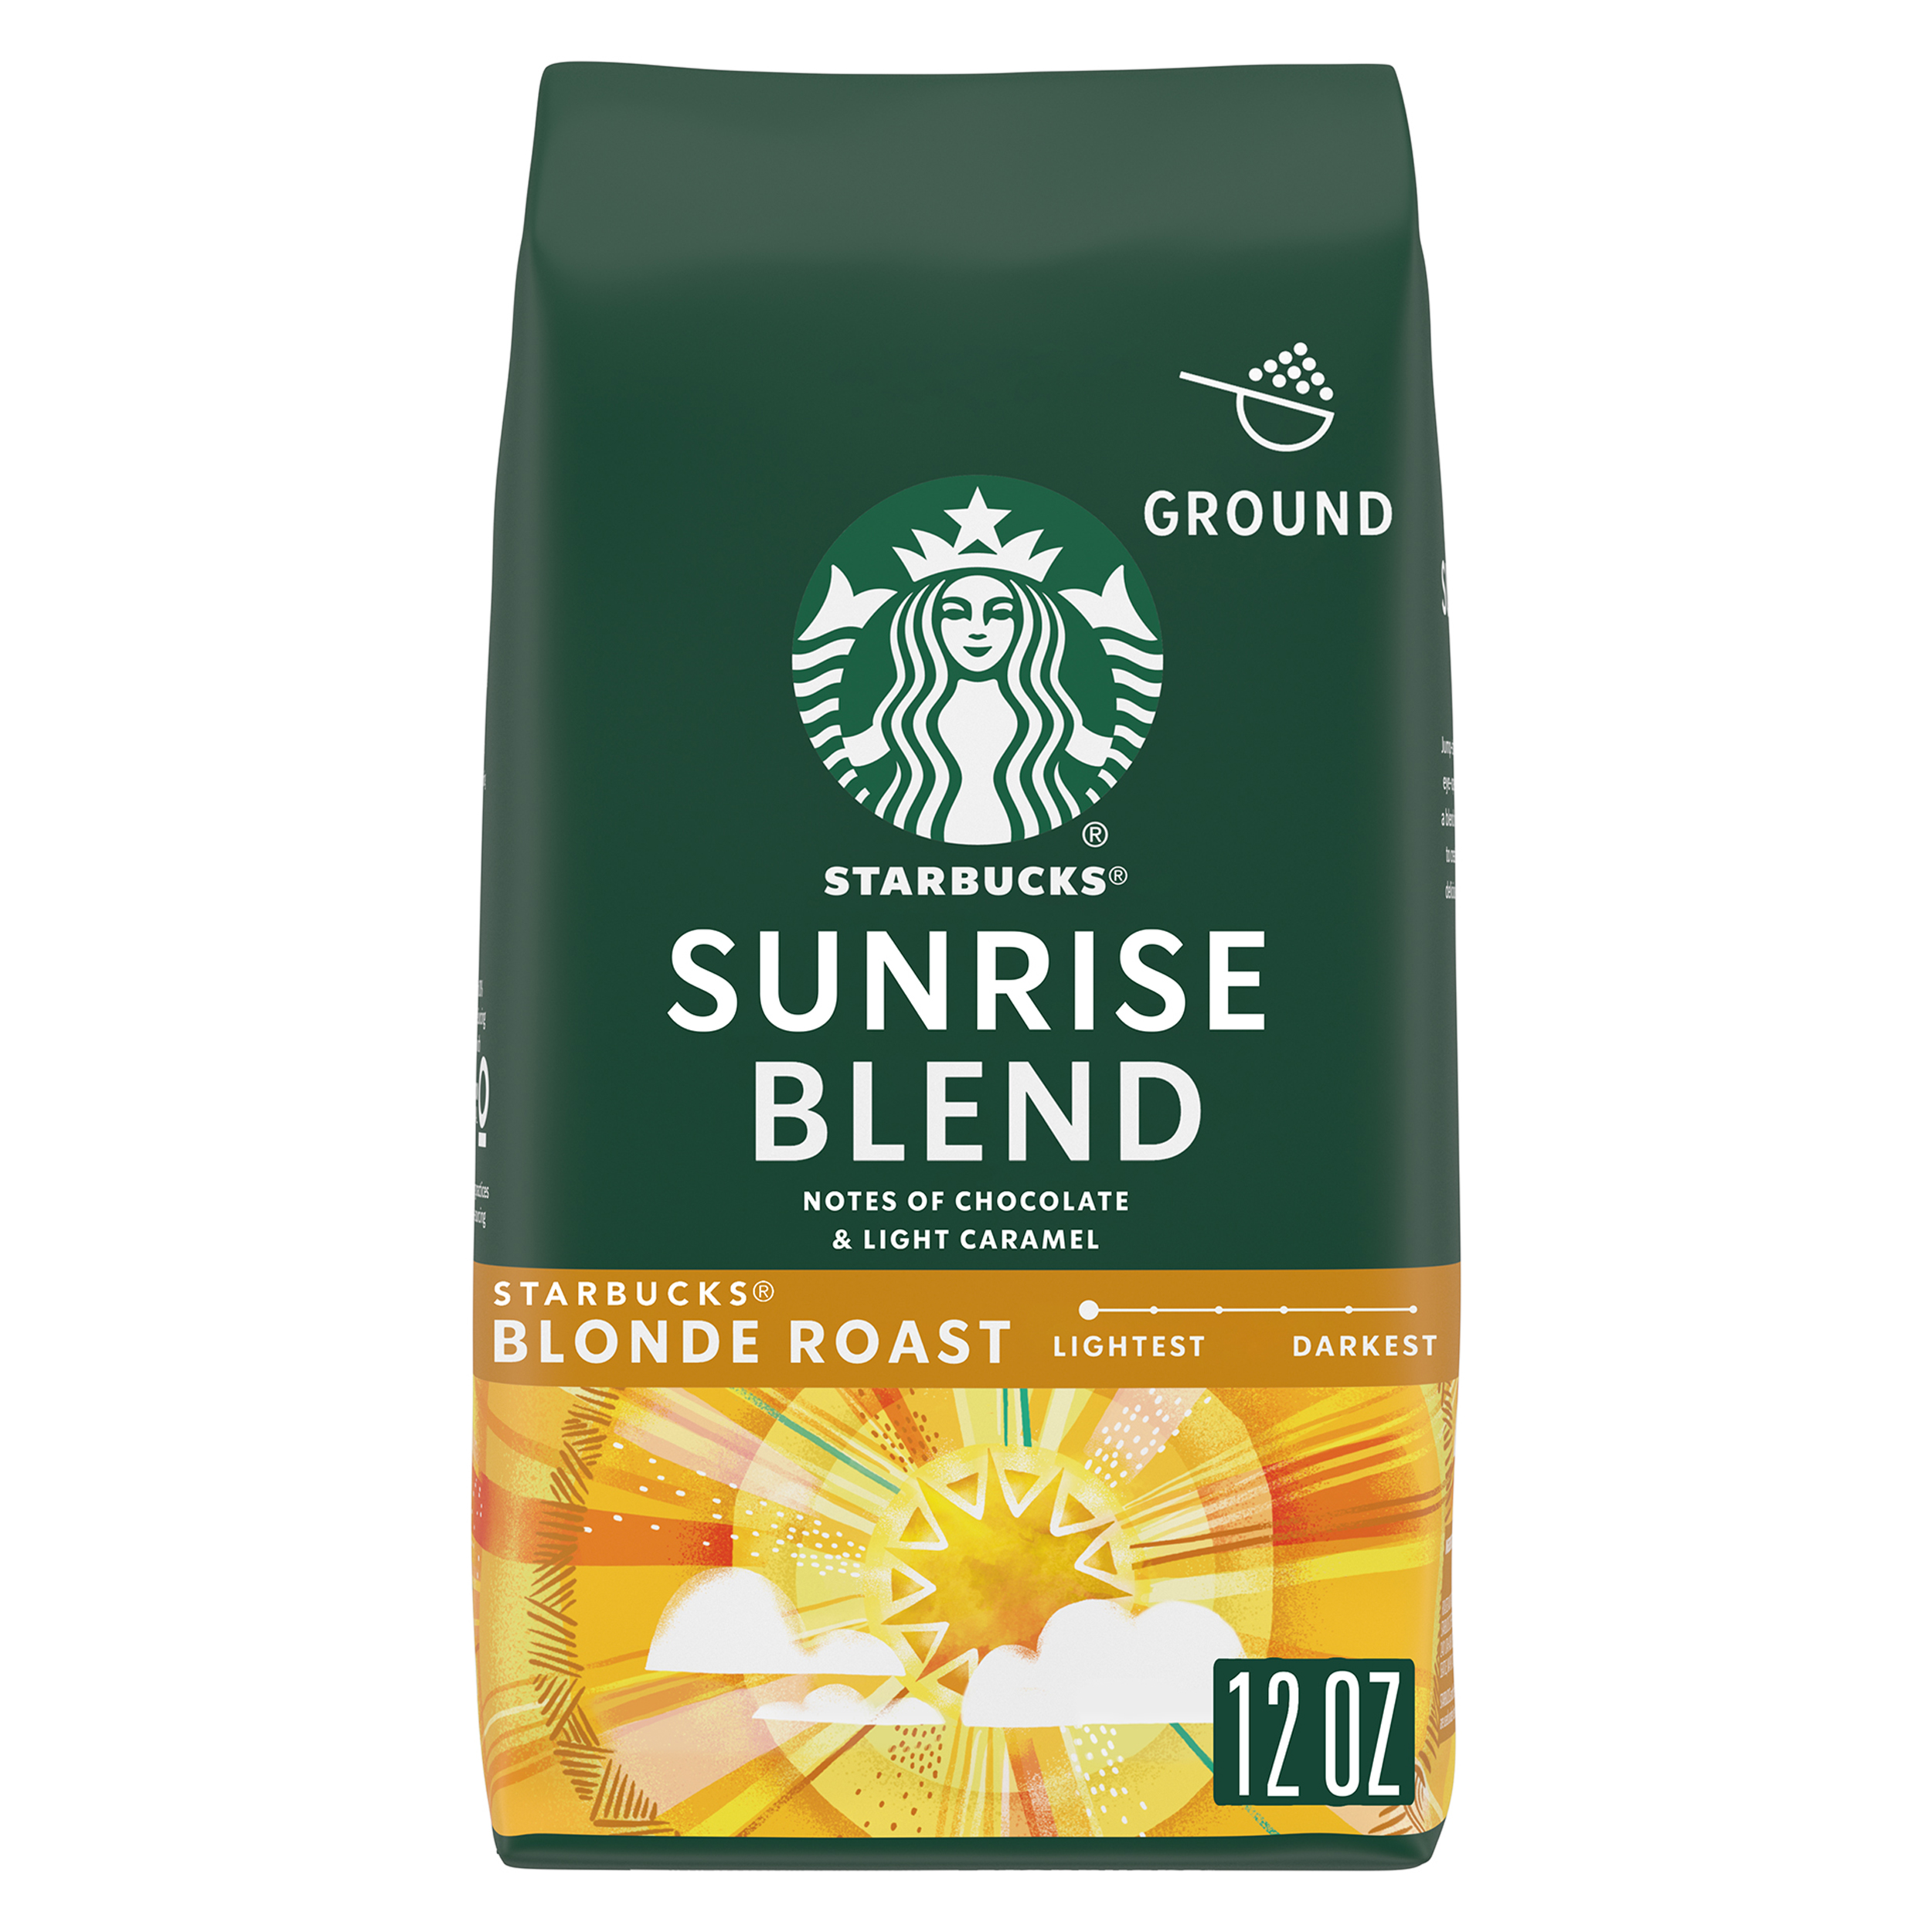 Starbucks Sunrise Blend, Ground Coffee, Starbucks Blonde Roast, 12 oz - image 1 of 8